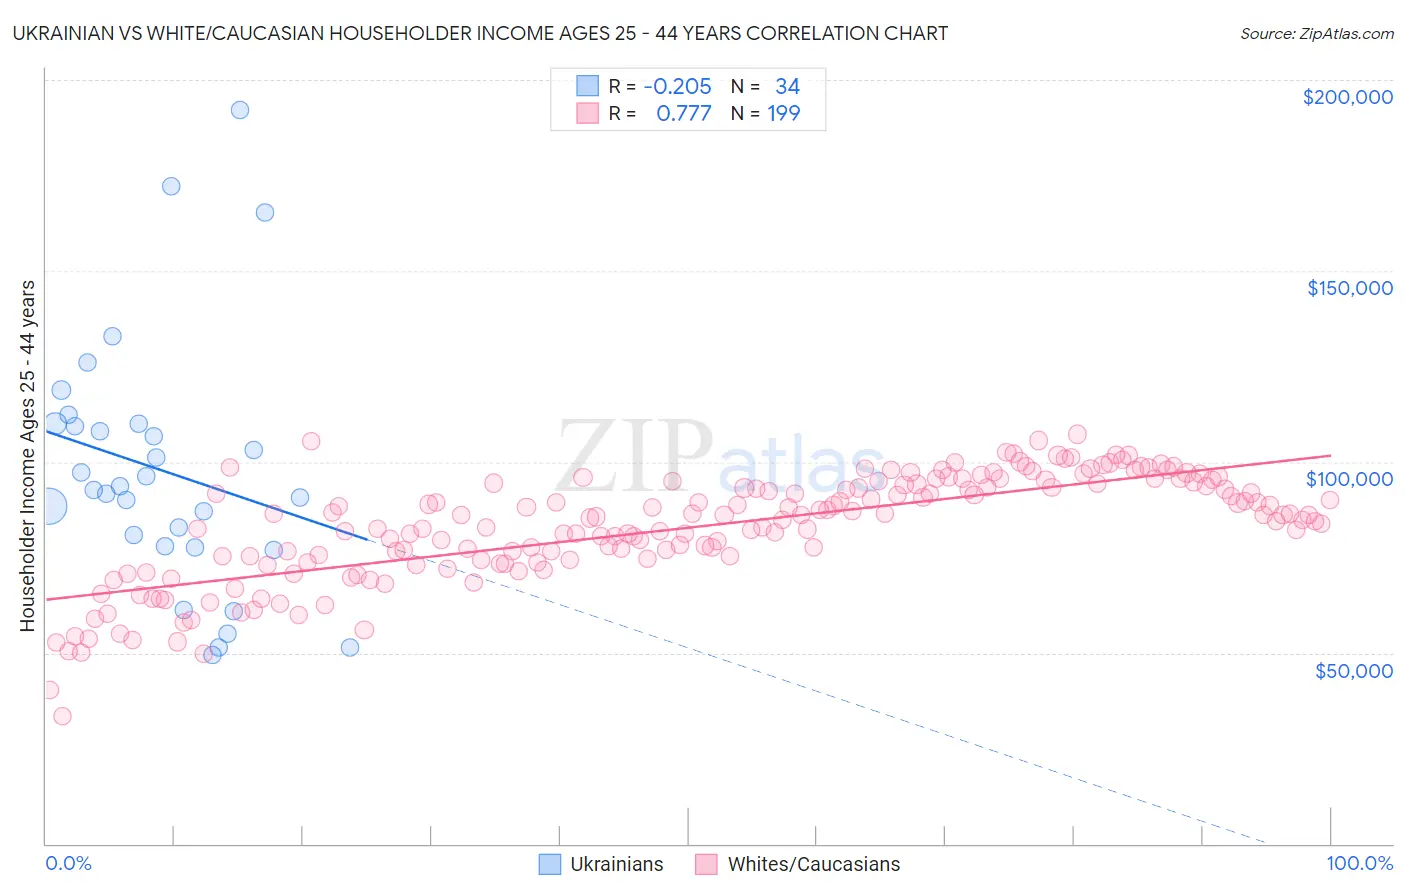 Ukrainian vs White/Caucasian Householder Income Ages 25 - 44 years